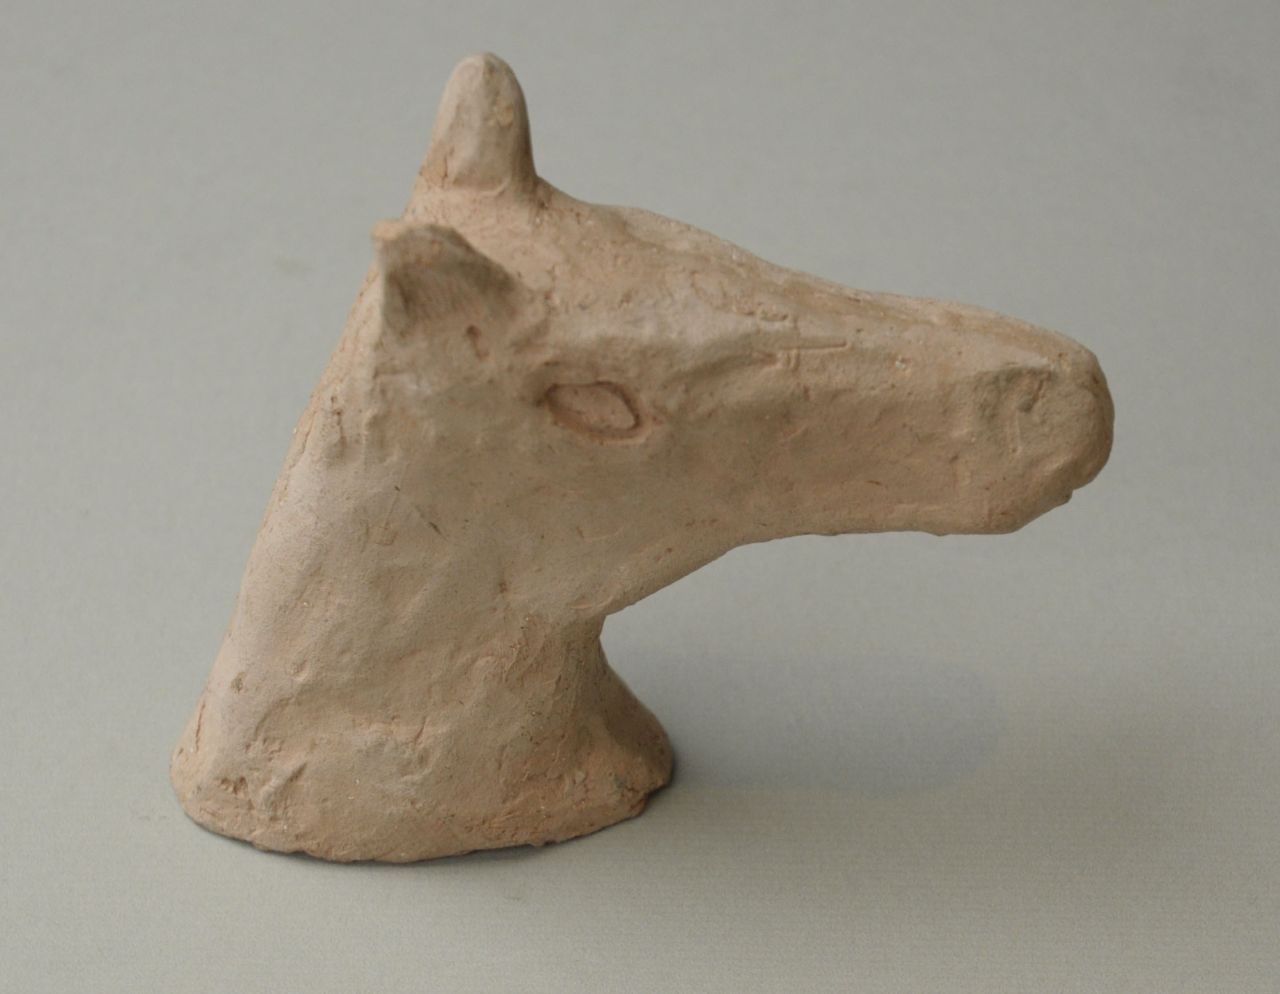 Oranje-Nassau (Prinses Beatrix) B.W.A. van | Beatrix Wilhelmina Armgard van Oranje-Nassau (Prinses Beatrix), A horse head, clay 9.5 cm, dated '48